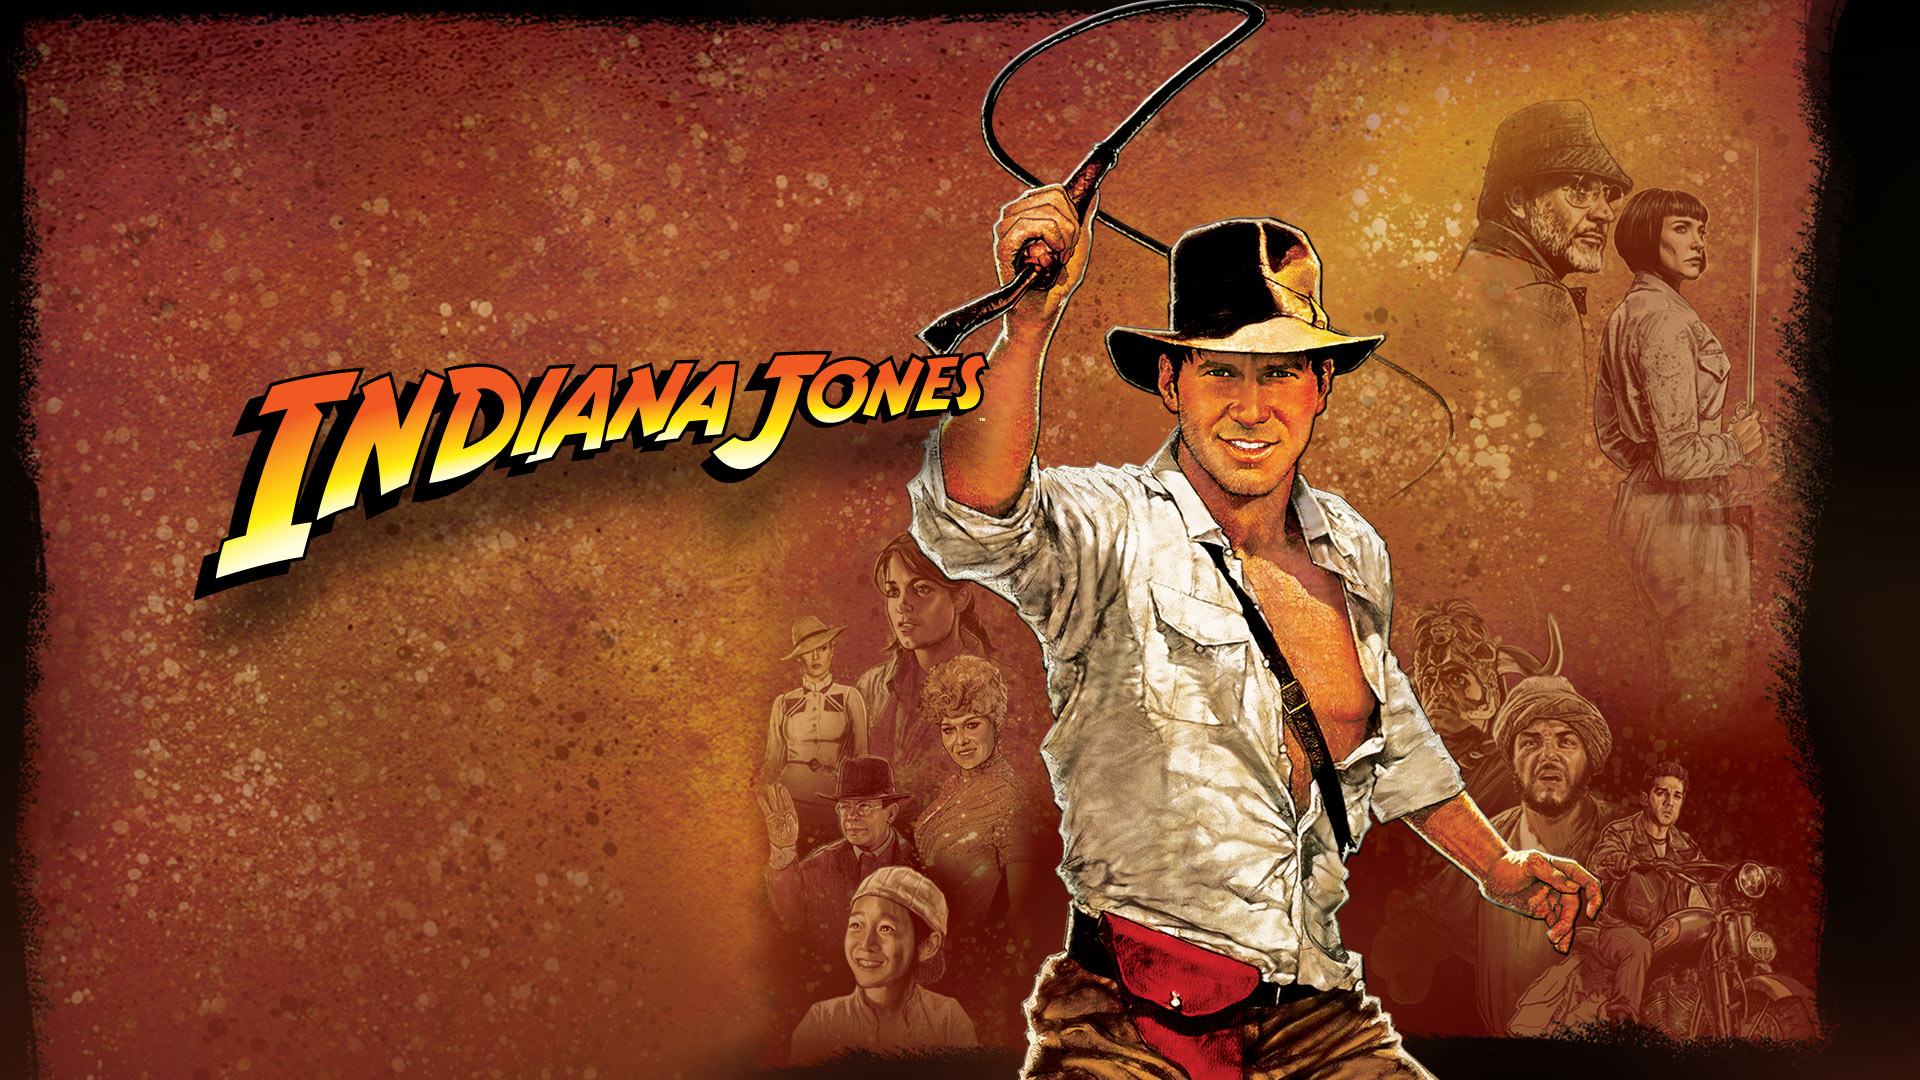 Indiana Jones [credit: Ufficio Stampa Sky]